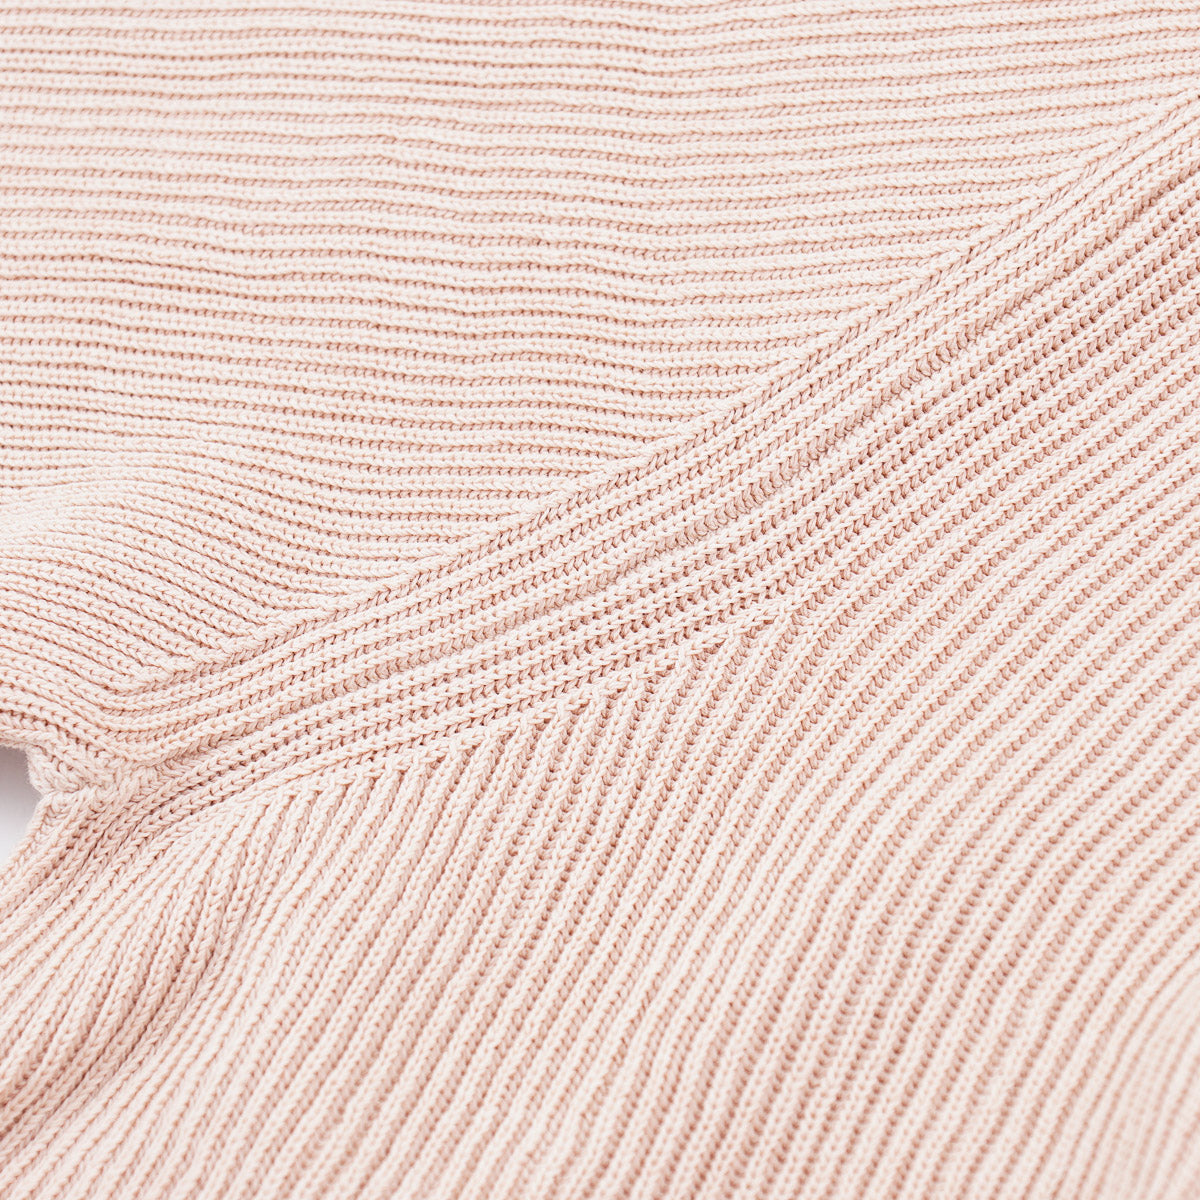 Boglioli Rib-Knit Cotton Sweater - Top Shelf Apparel